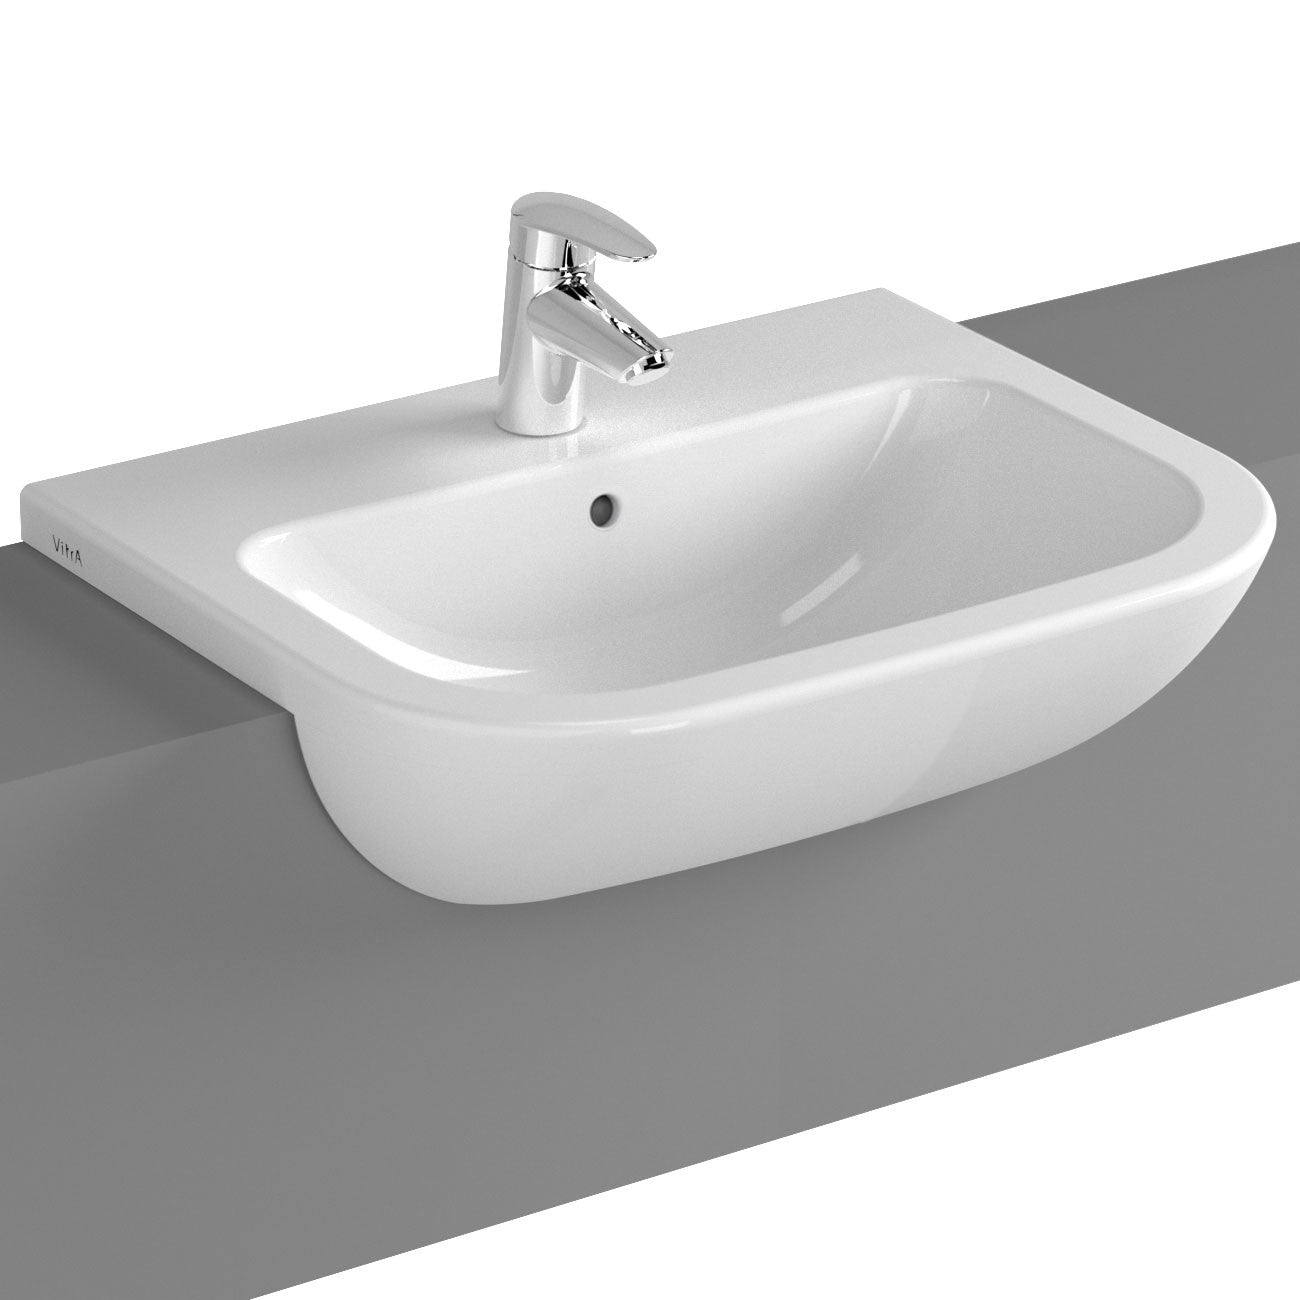 Vitra S20 Semi Recessed Washbasins